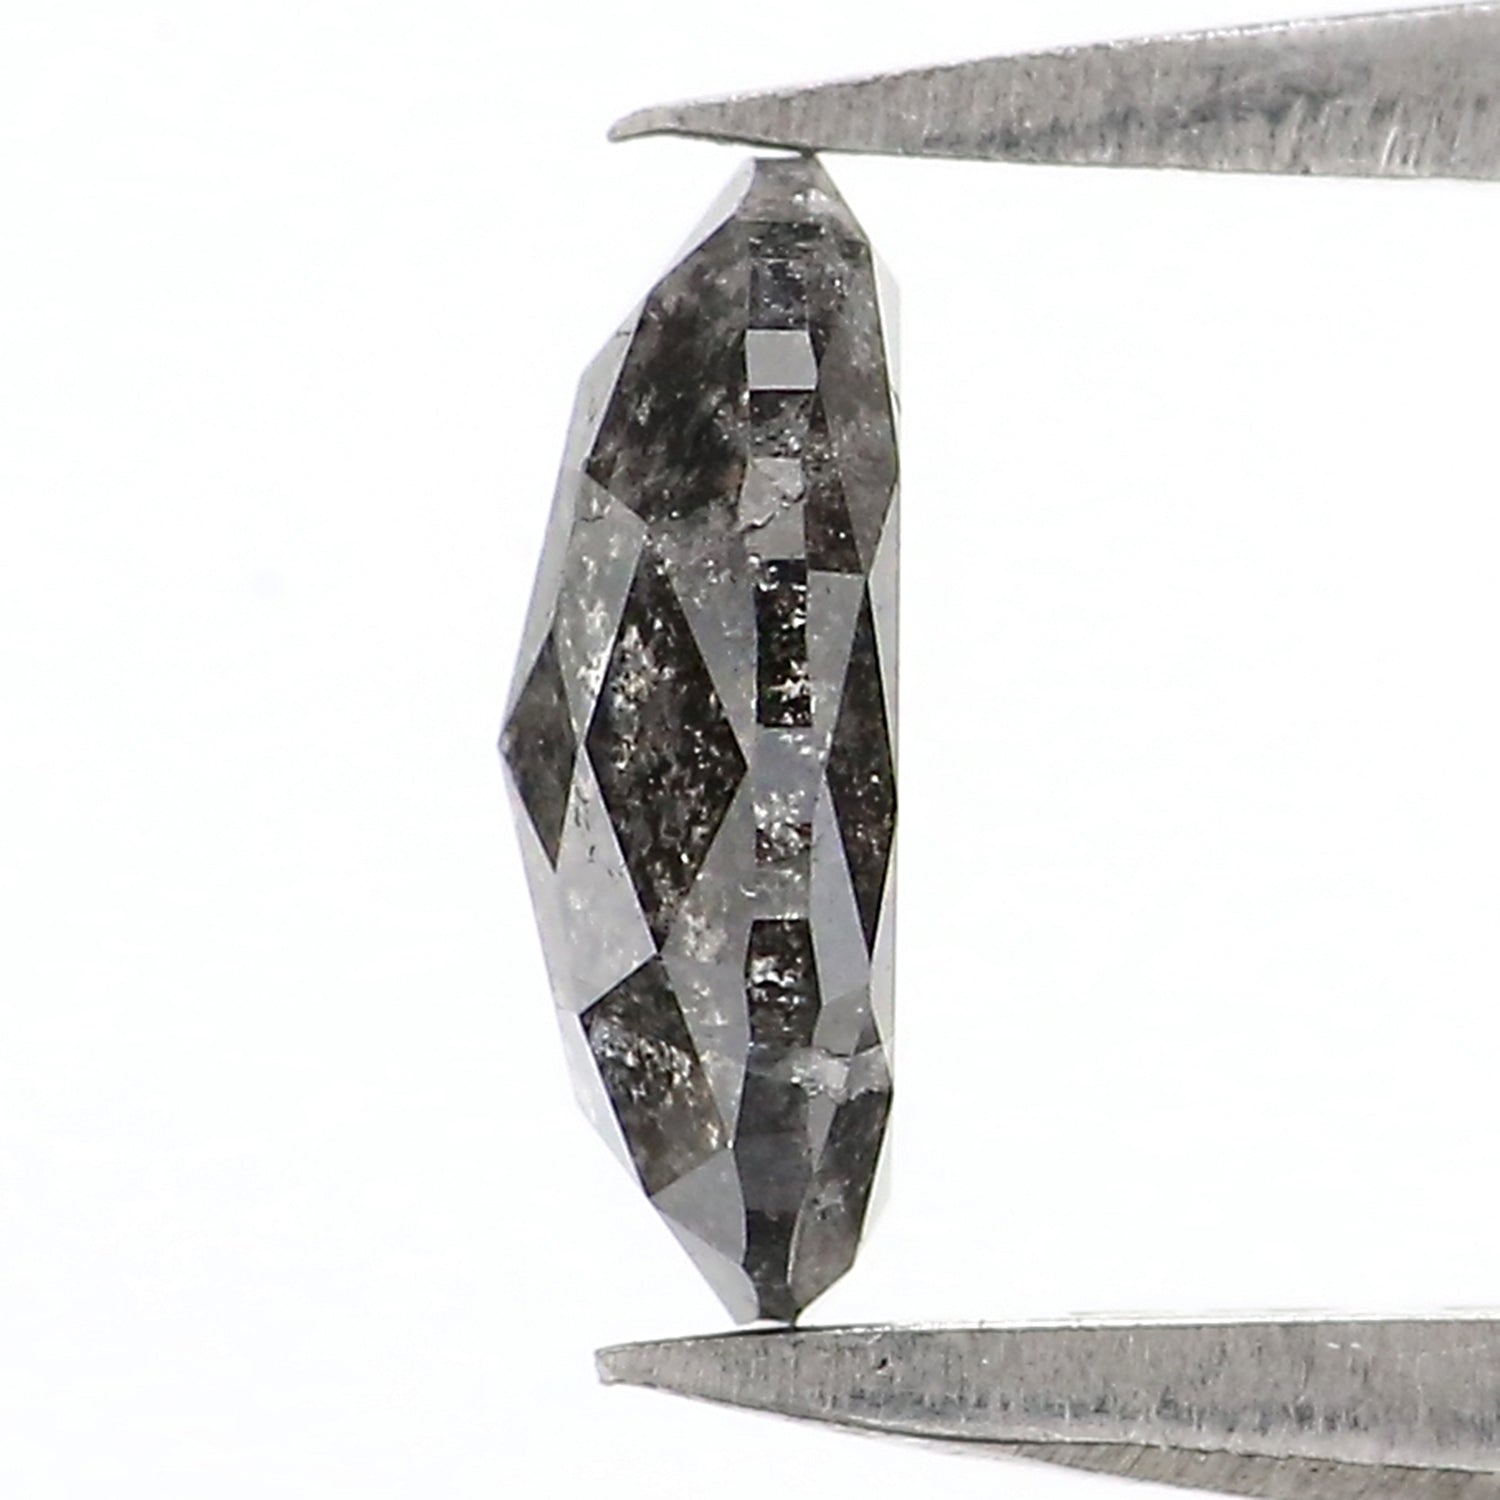 Natural Loose Oval Diamond, Salt And Pepper Oval Diamond, Natural Loose Diamond, Oval Rose Cut Diamond, 0.80 CT Oval Shape Diamond KR2708